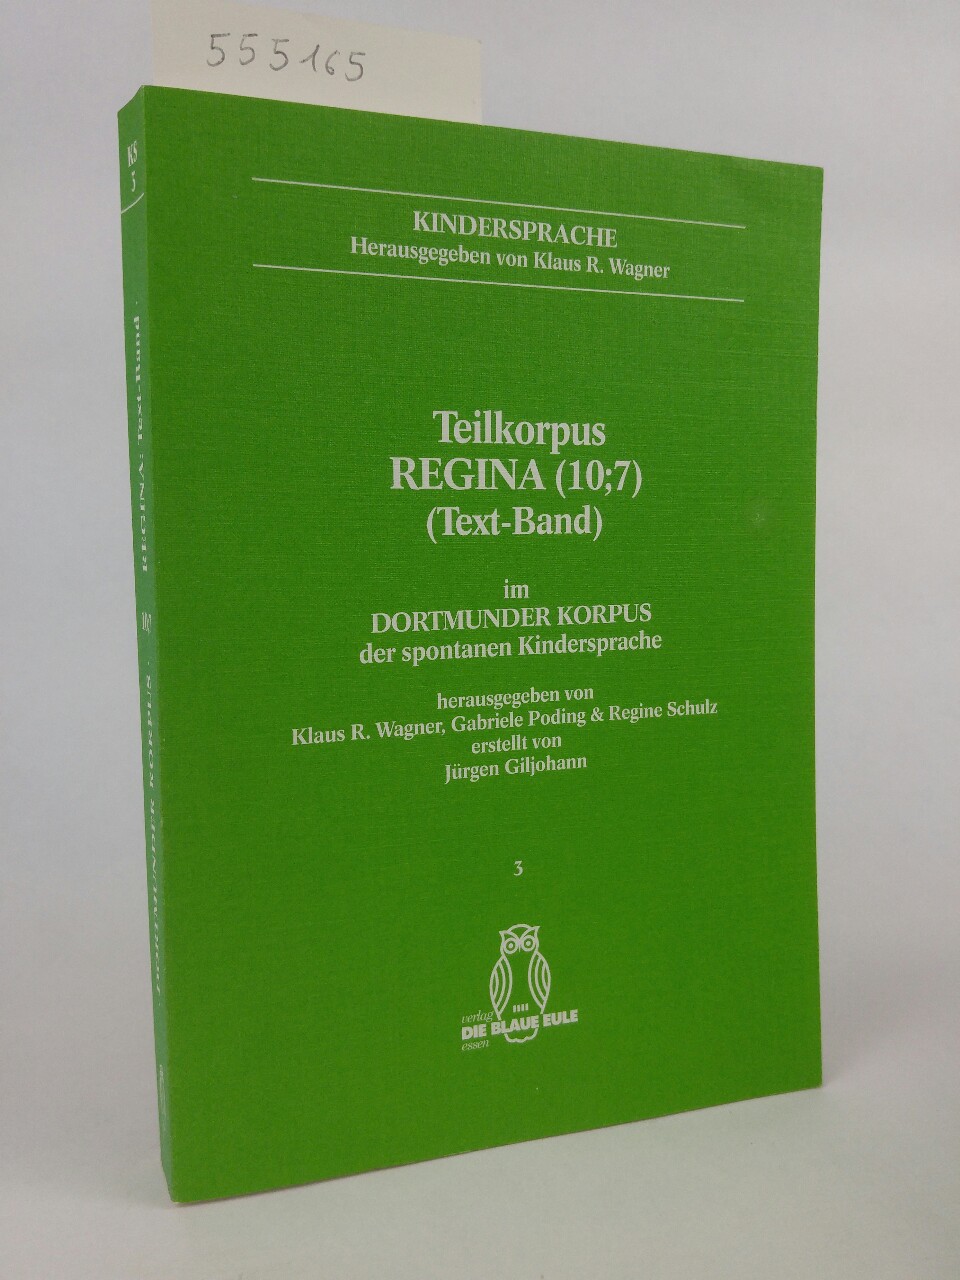 Teilkorpus Regina (10;7) Dortmunder Korpus der spontanen Kindersprache, Band 3 (Text-Band) - Wagner [Hrsg.], Klaus, R., Gabriele Poding Regine Schulz u. a.